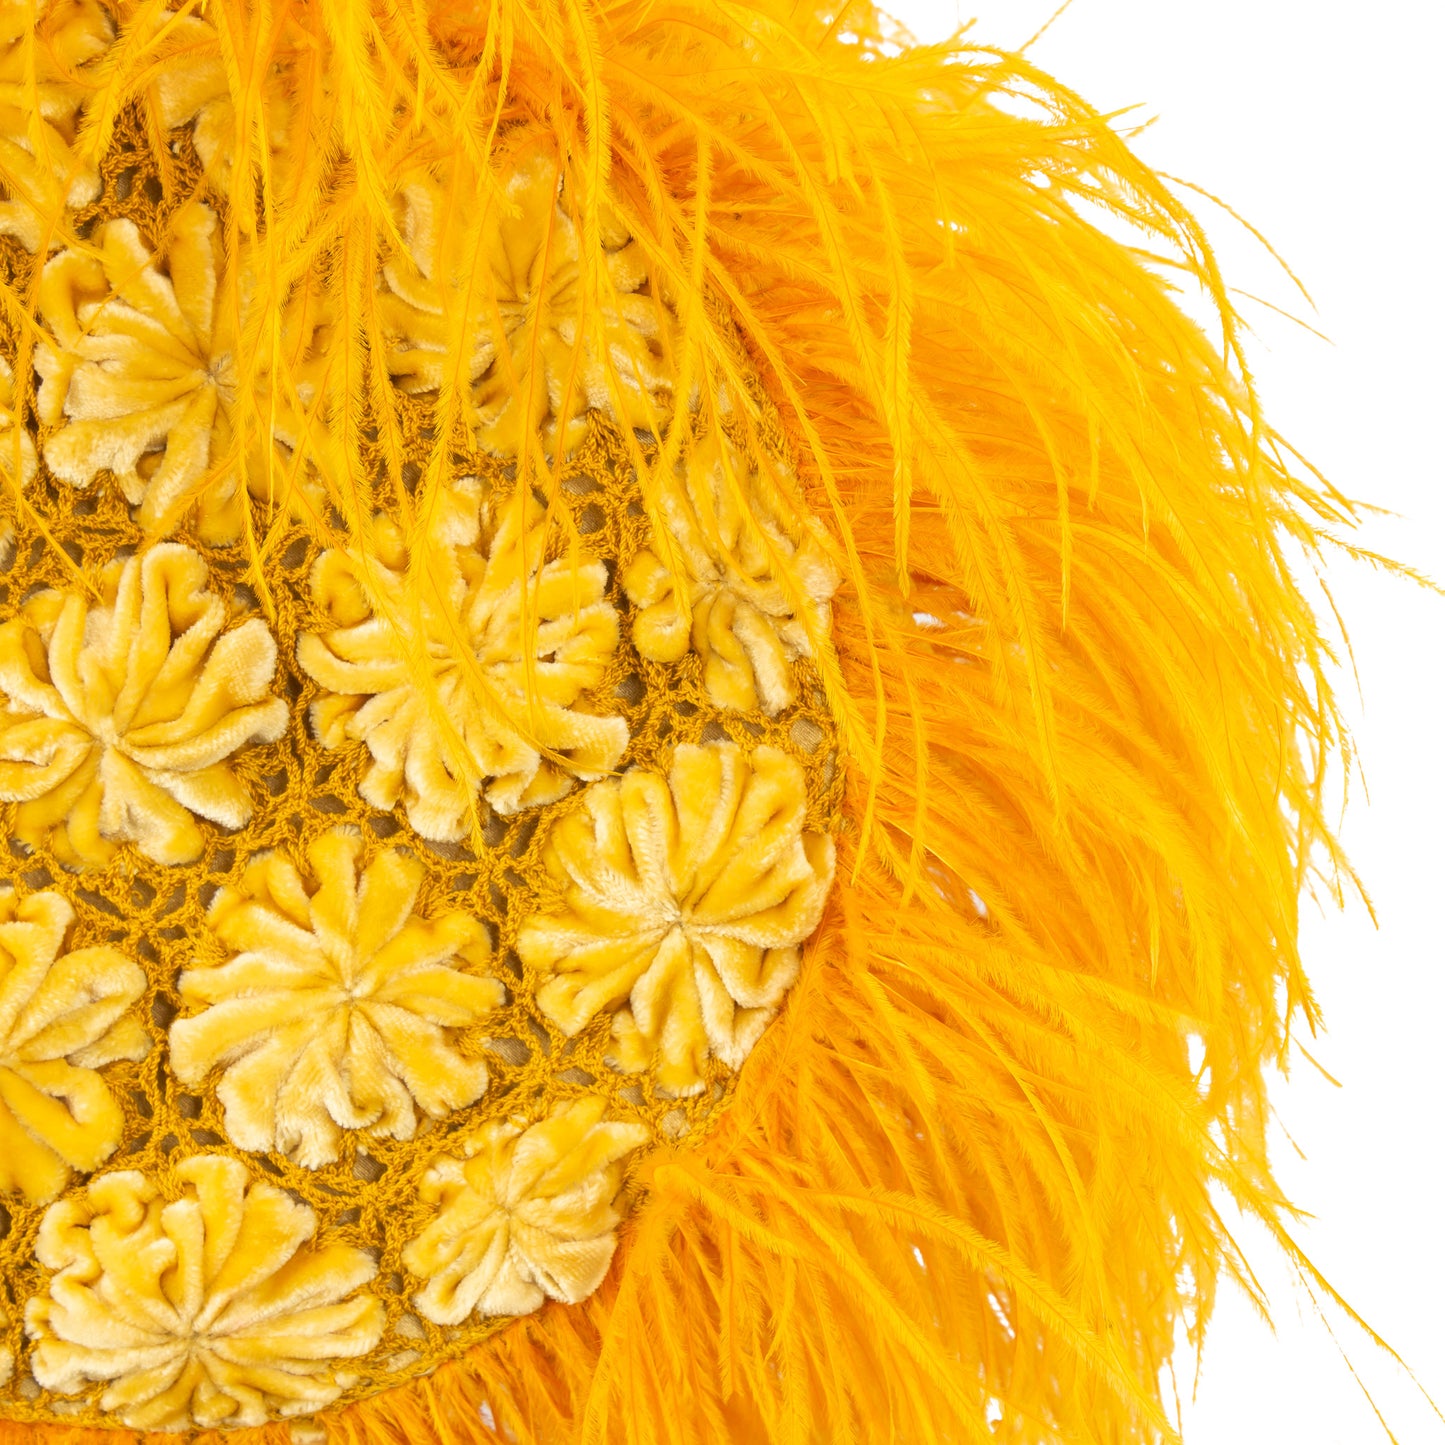 Yellow Velvet Flower Crotchet Bag With Autrice Feather